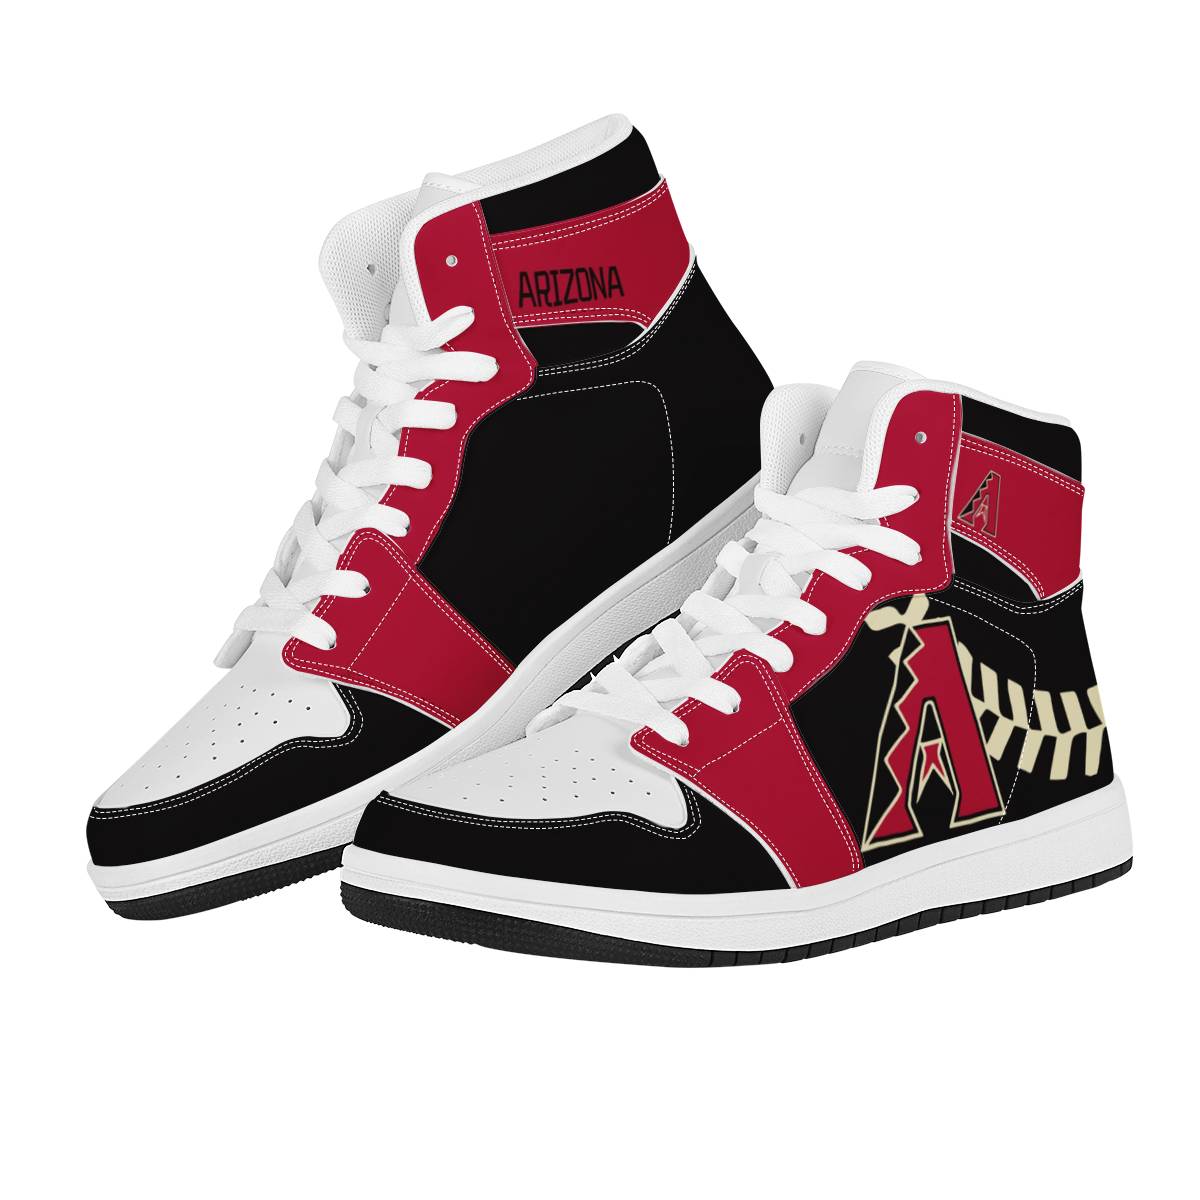 Men's Arizona Diamondbacks High Top Leather AJ1 Sneakers 002